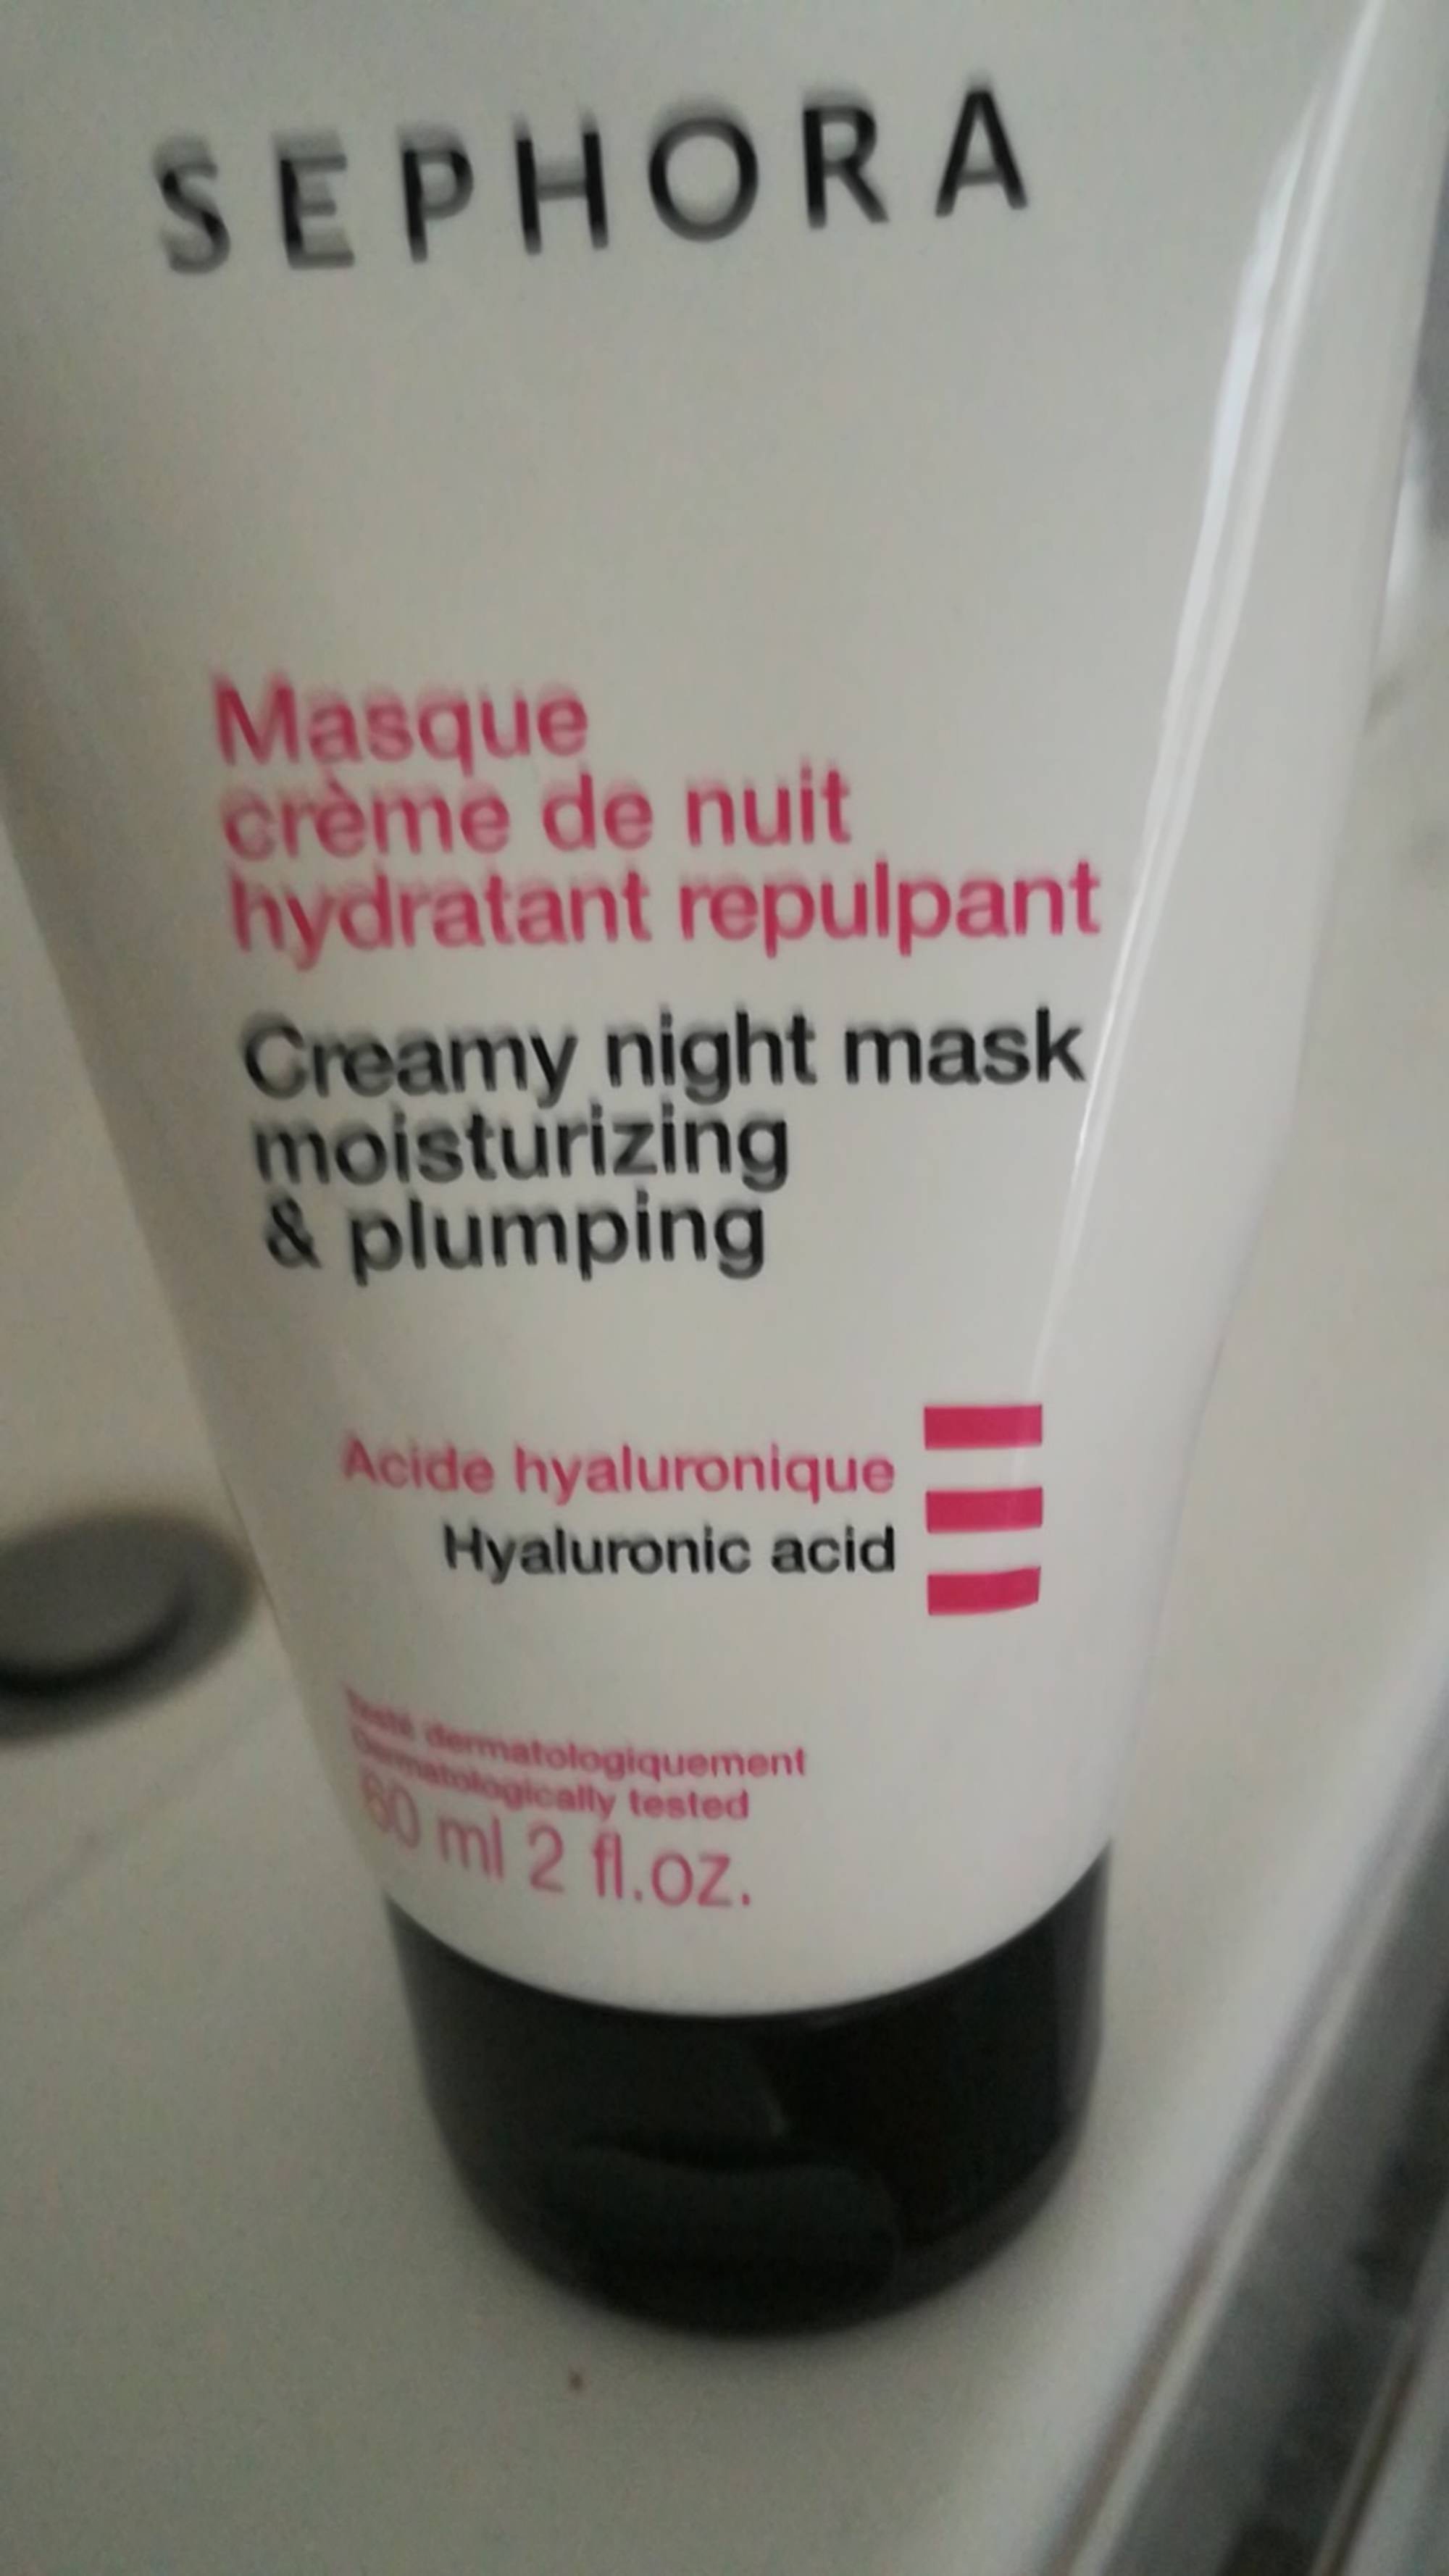 SEPHORA - Masque crème de nuit hydratant repulpant